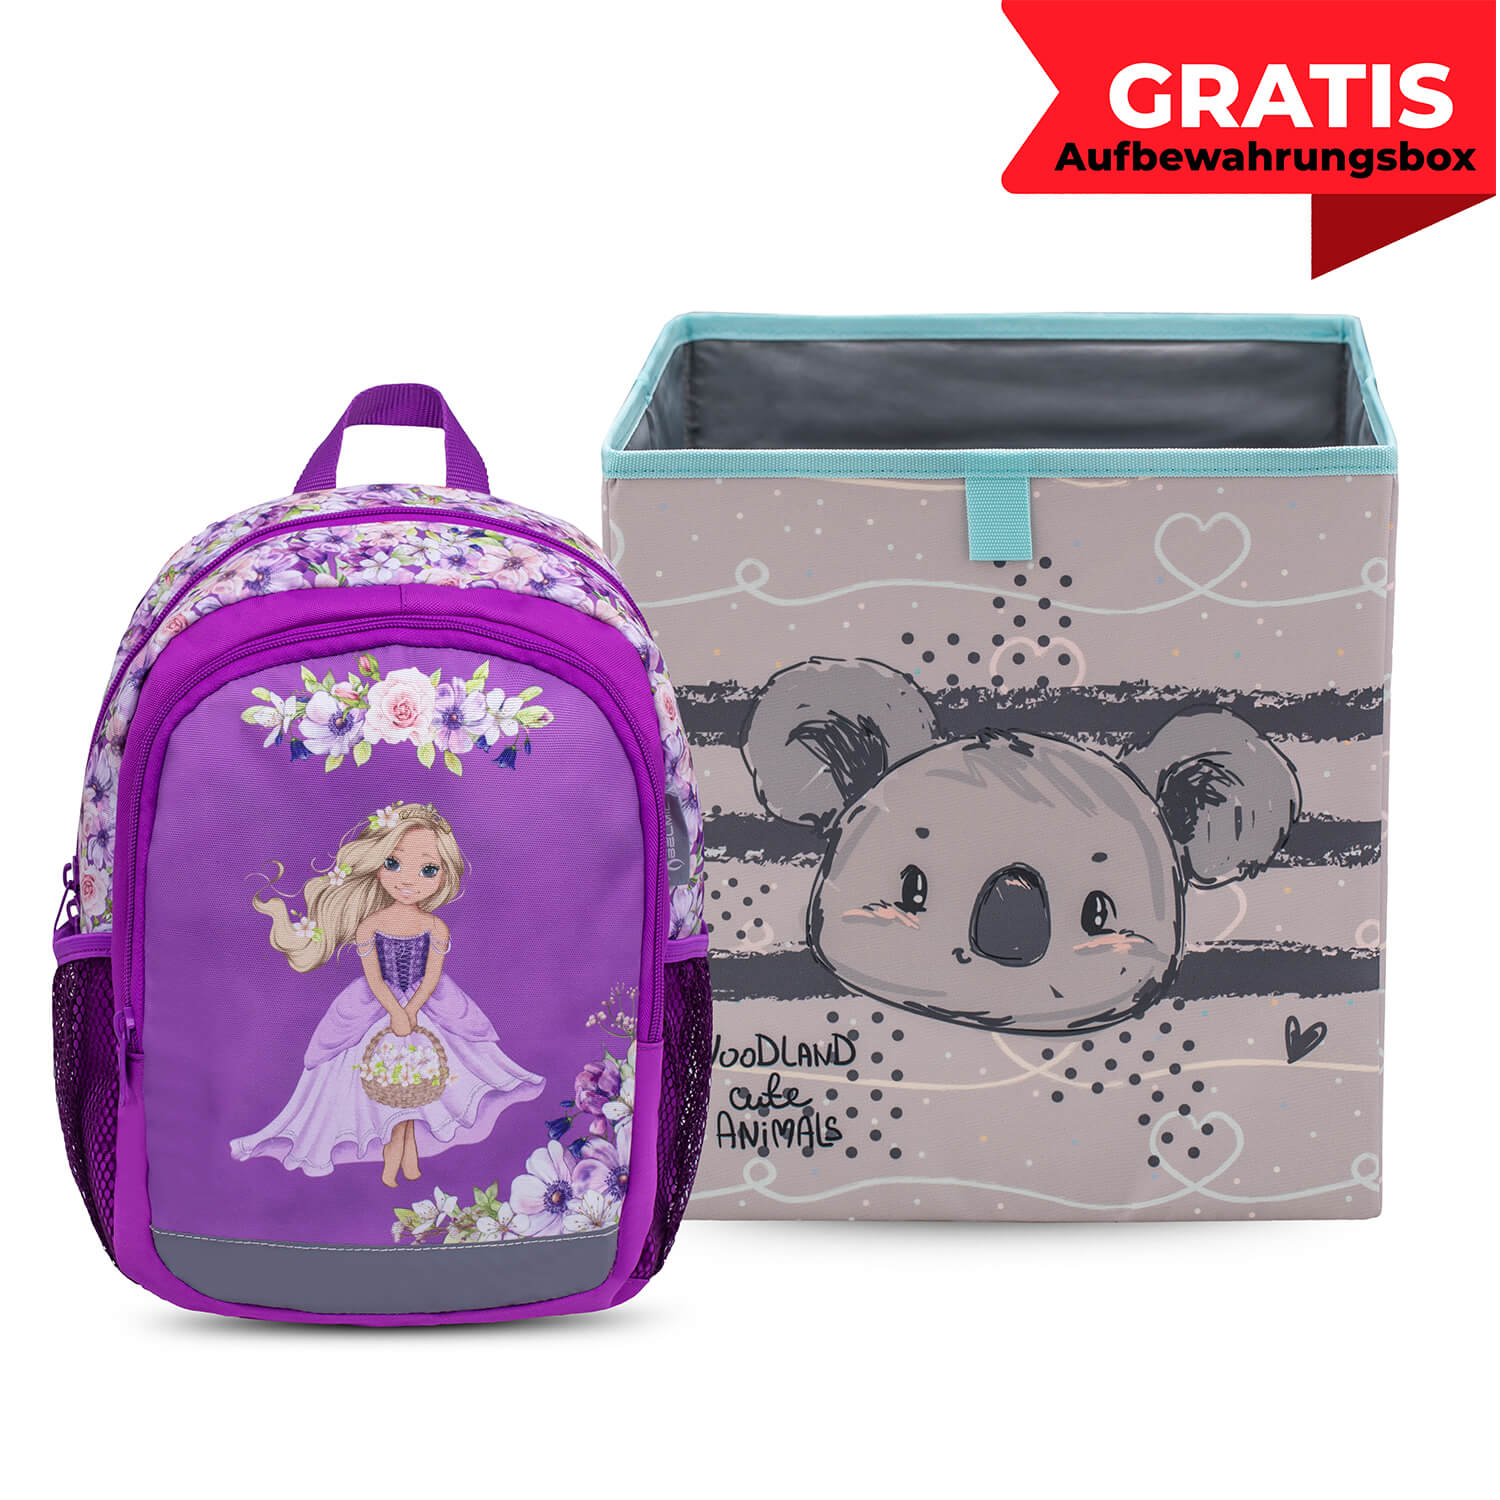 Kiddy Plus Princess Kindergarten Bag with GRATIS Storage box